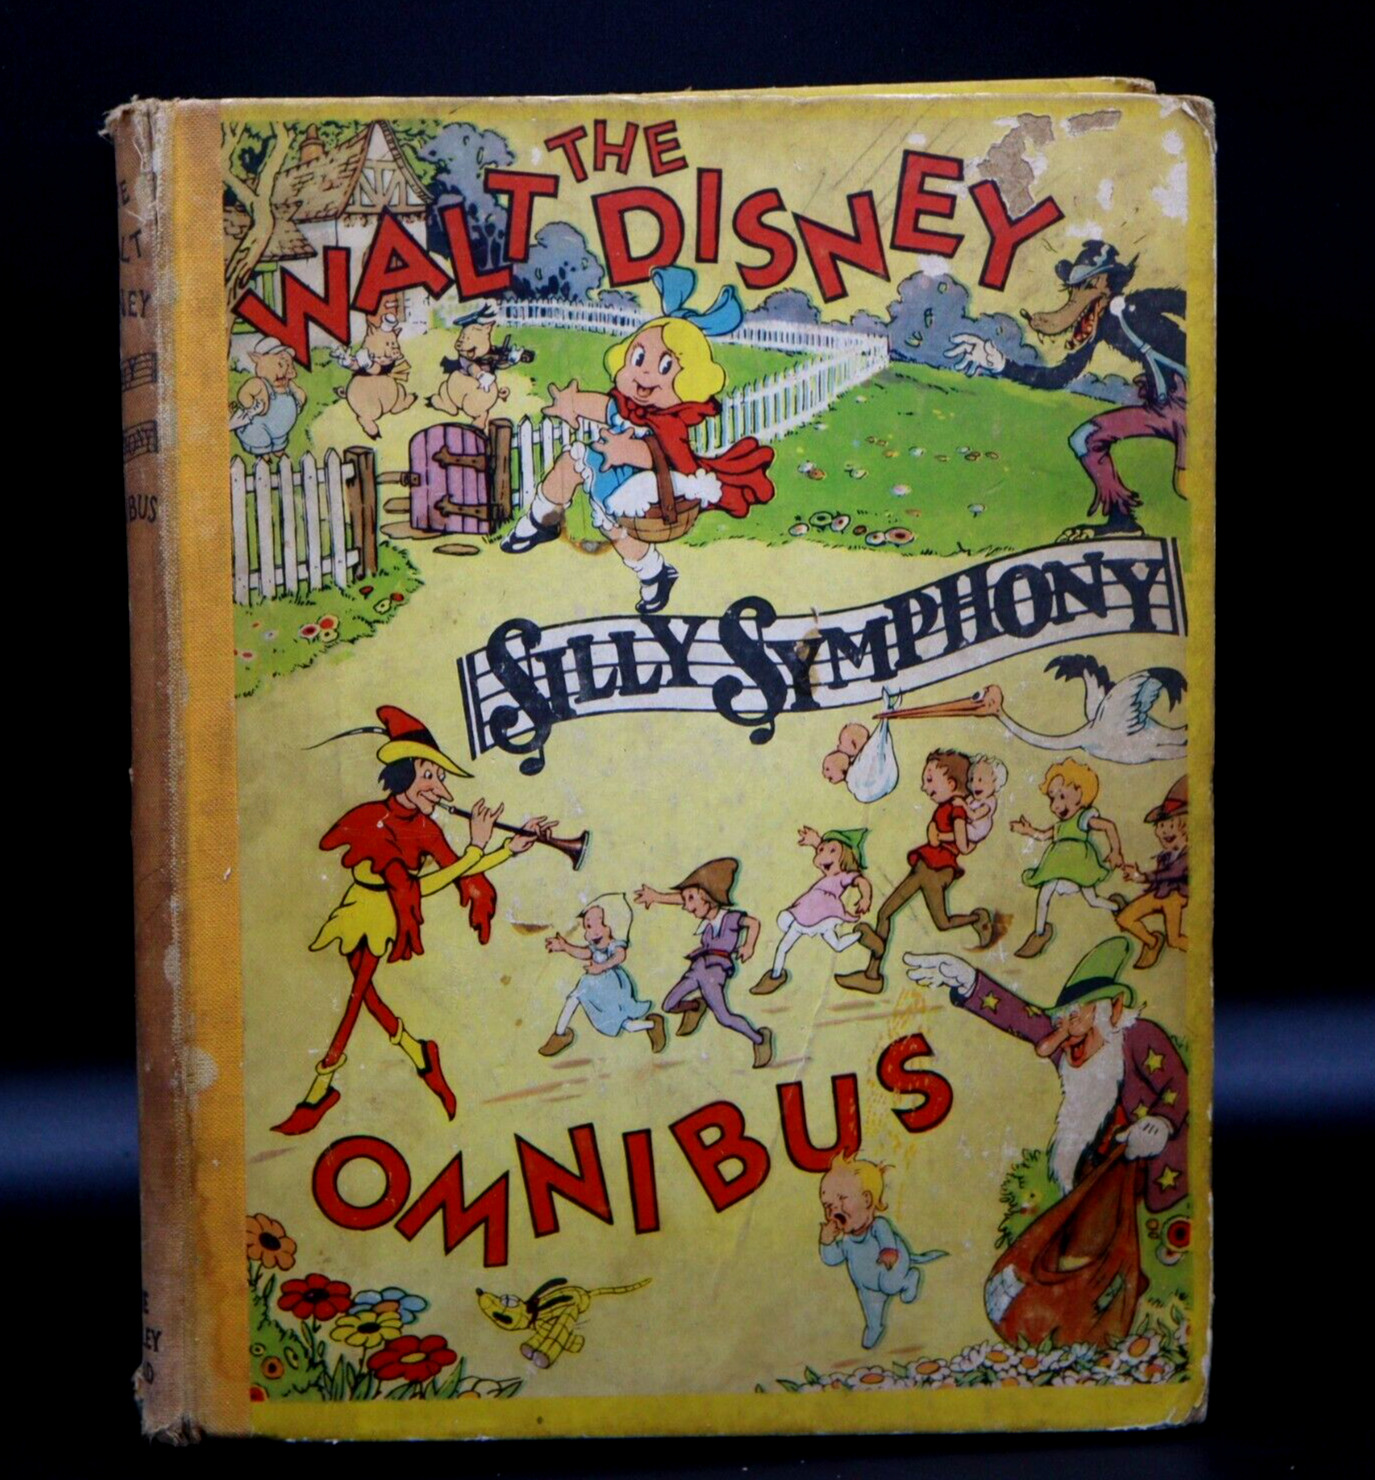 1935 WALT DISNEY SILLY SYMPHONY OMNIBUS HARDCOVER BOOK